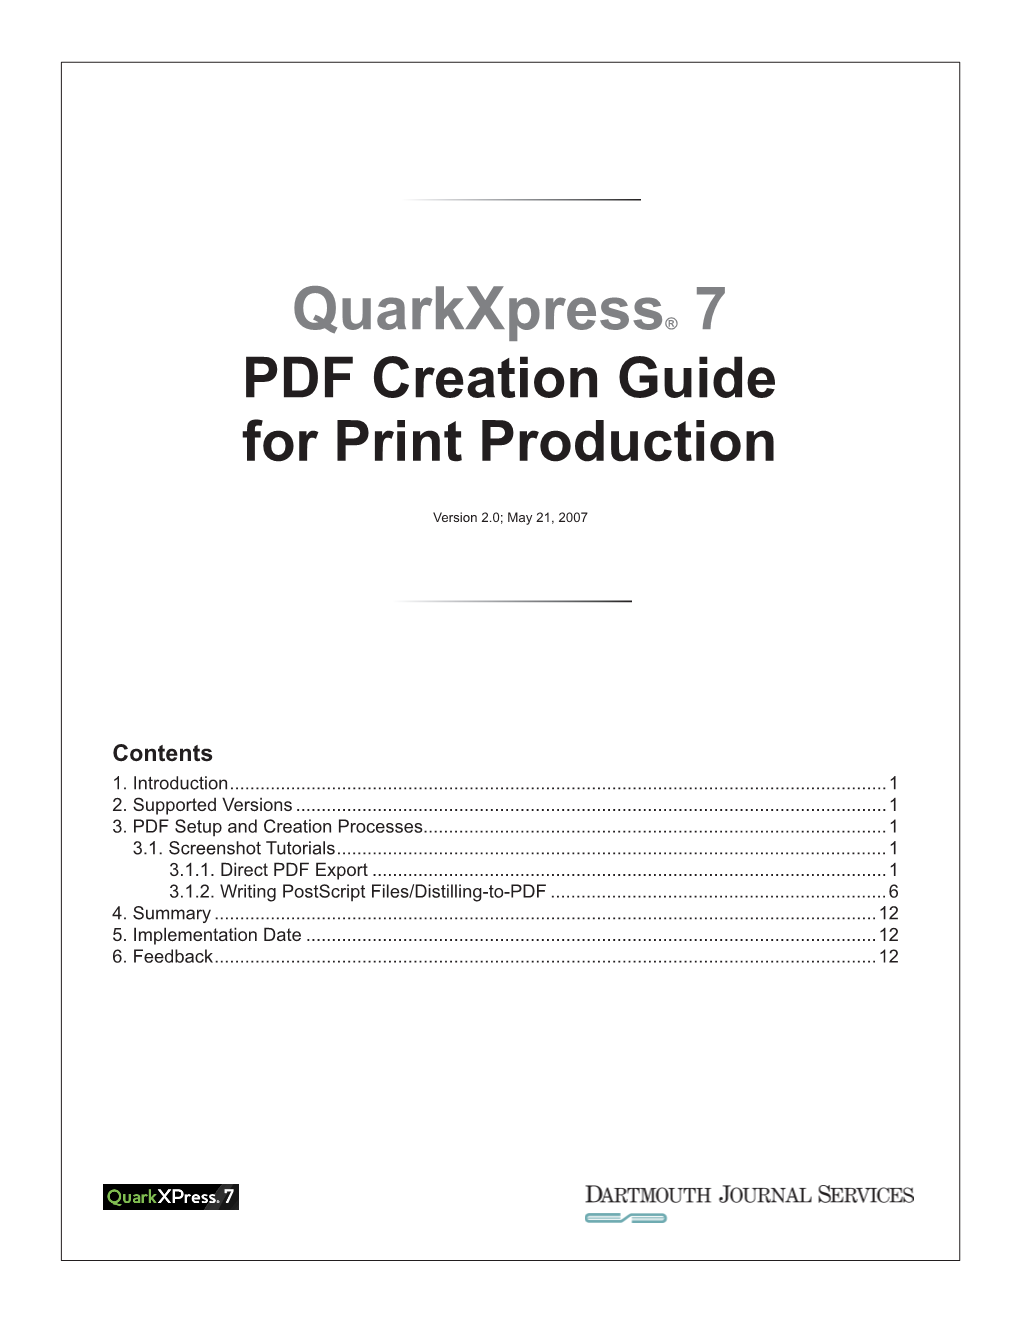 Quarkxpress® 7 PDF Creation Guide for Print Production